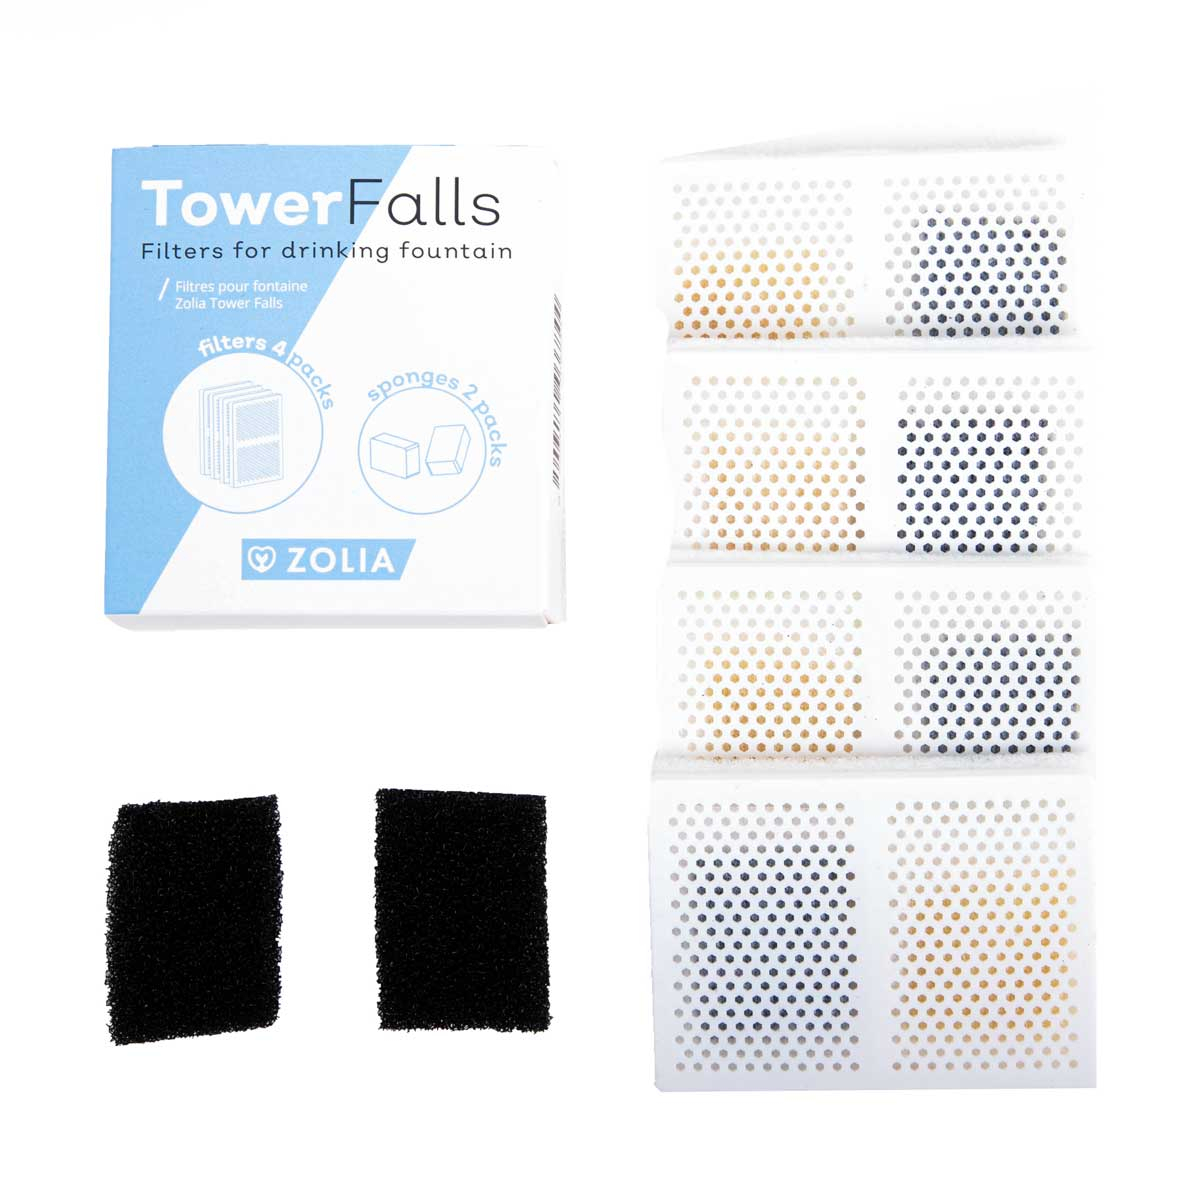 Filtro para Chafariz Zolia Tower Falls - 3,1L - 4 filtros de carvão + 2 filtros de espuma